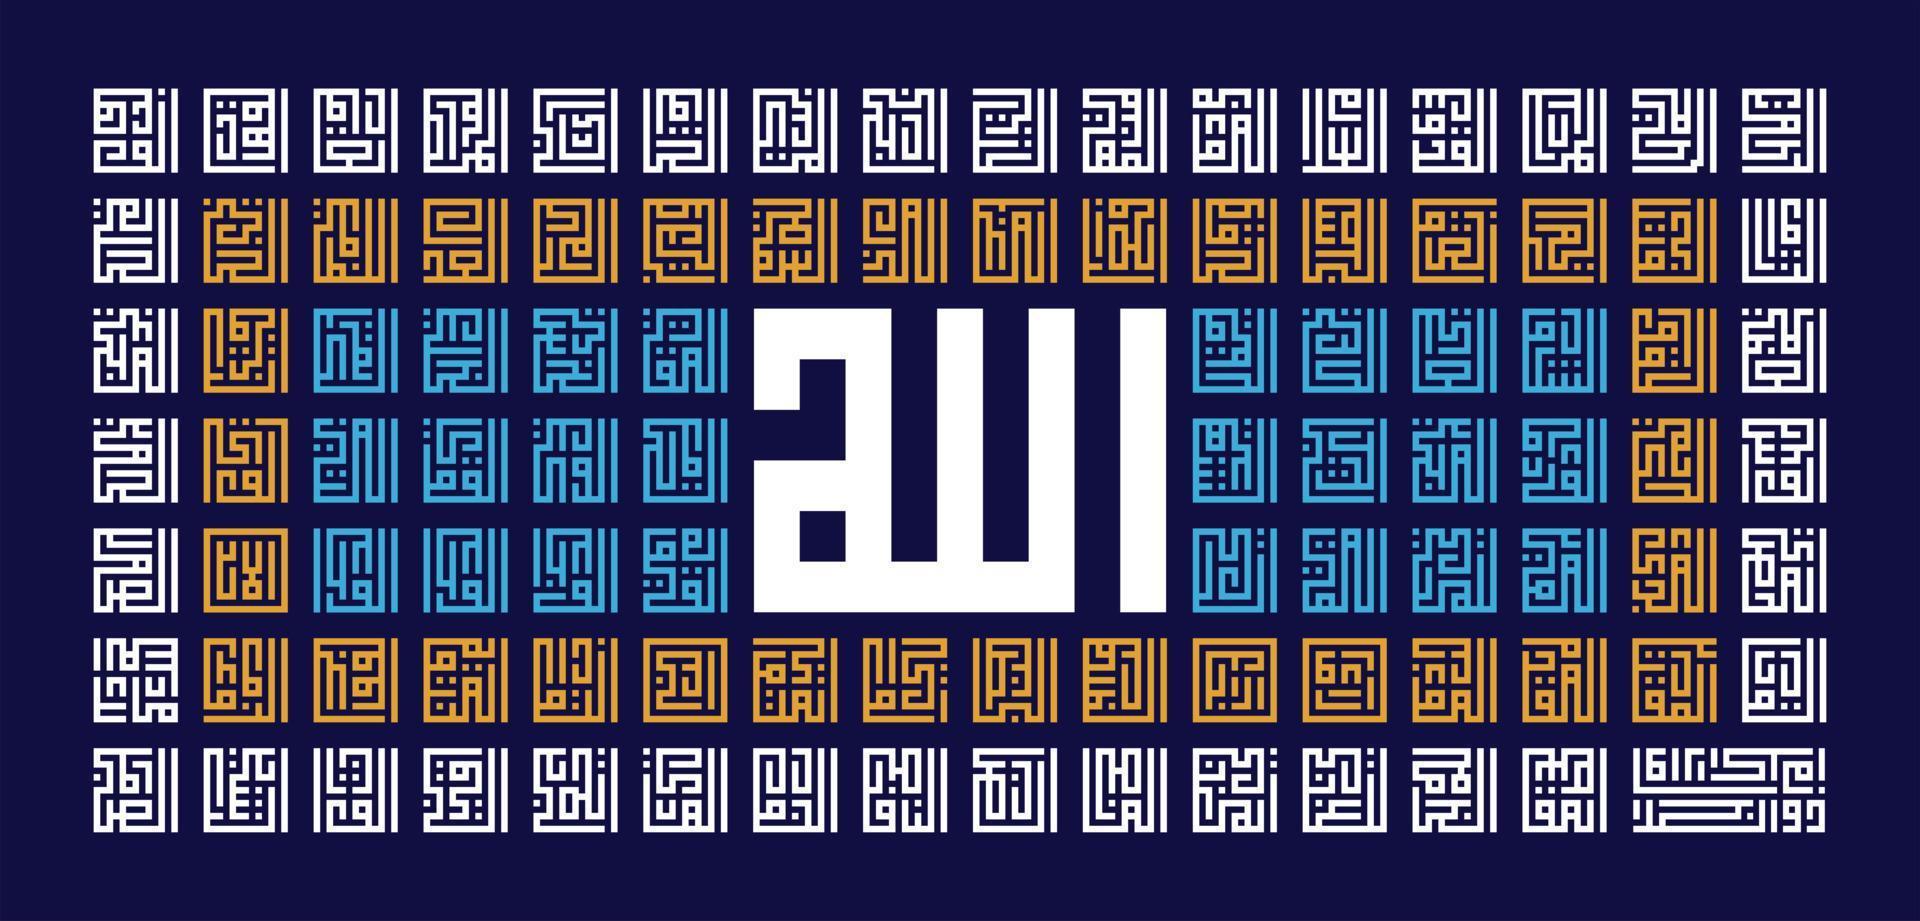 kufi arabicum kalligrafi av asmaul husna '99 namn af allah'. vektor